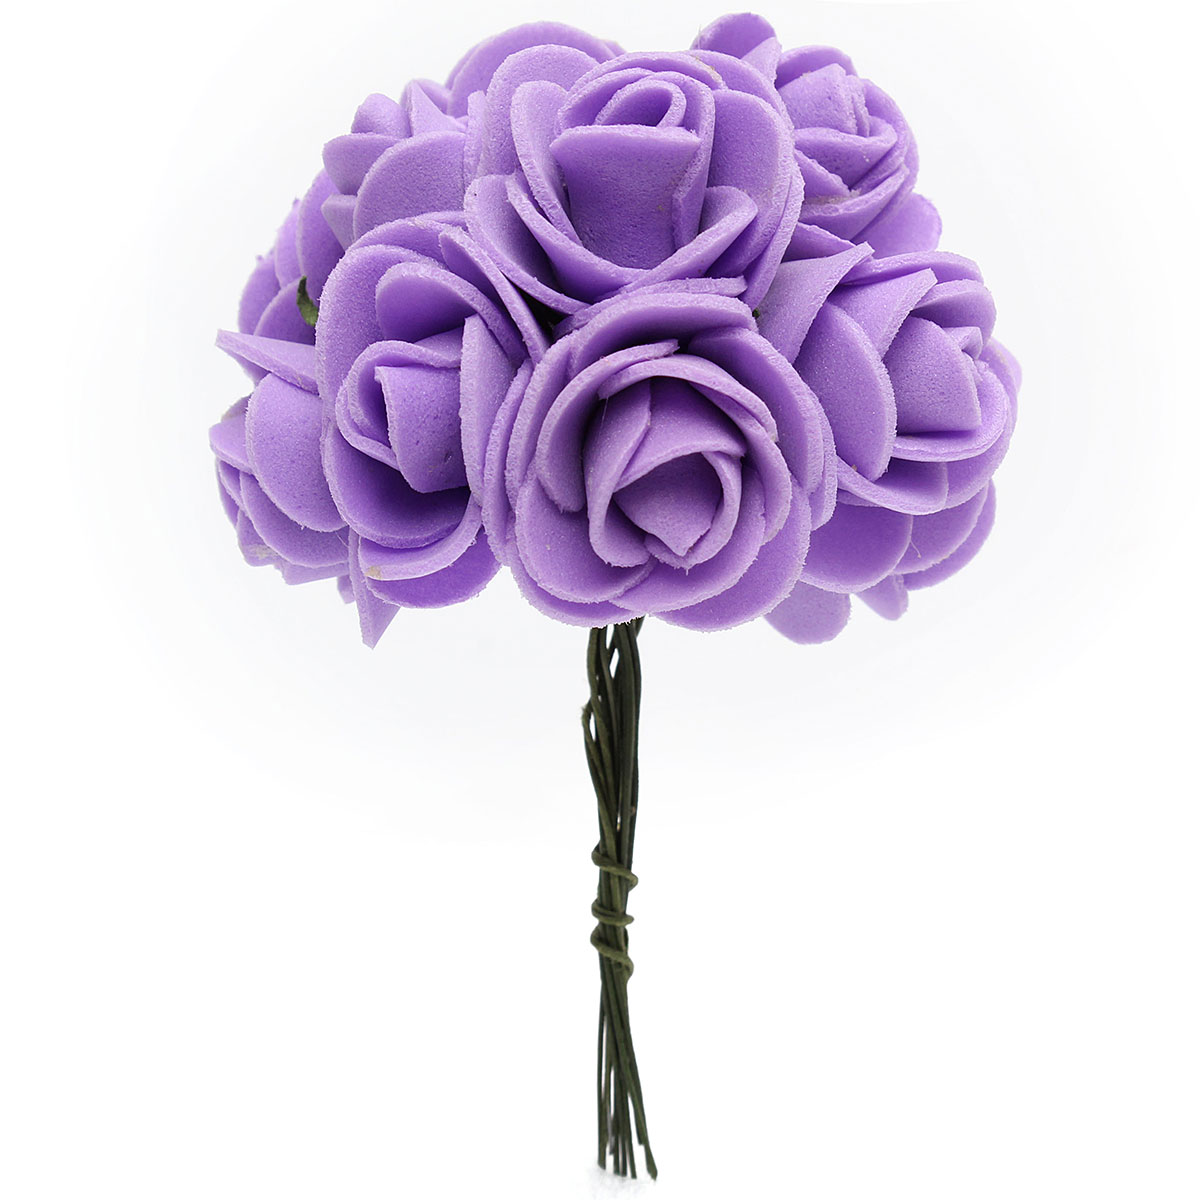 12PCS-Bride-Bouquet-Paper-Rose-Flowers-With-Wire-Stems-Wedding-Home-Party-Decoration-1029884